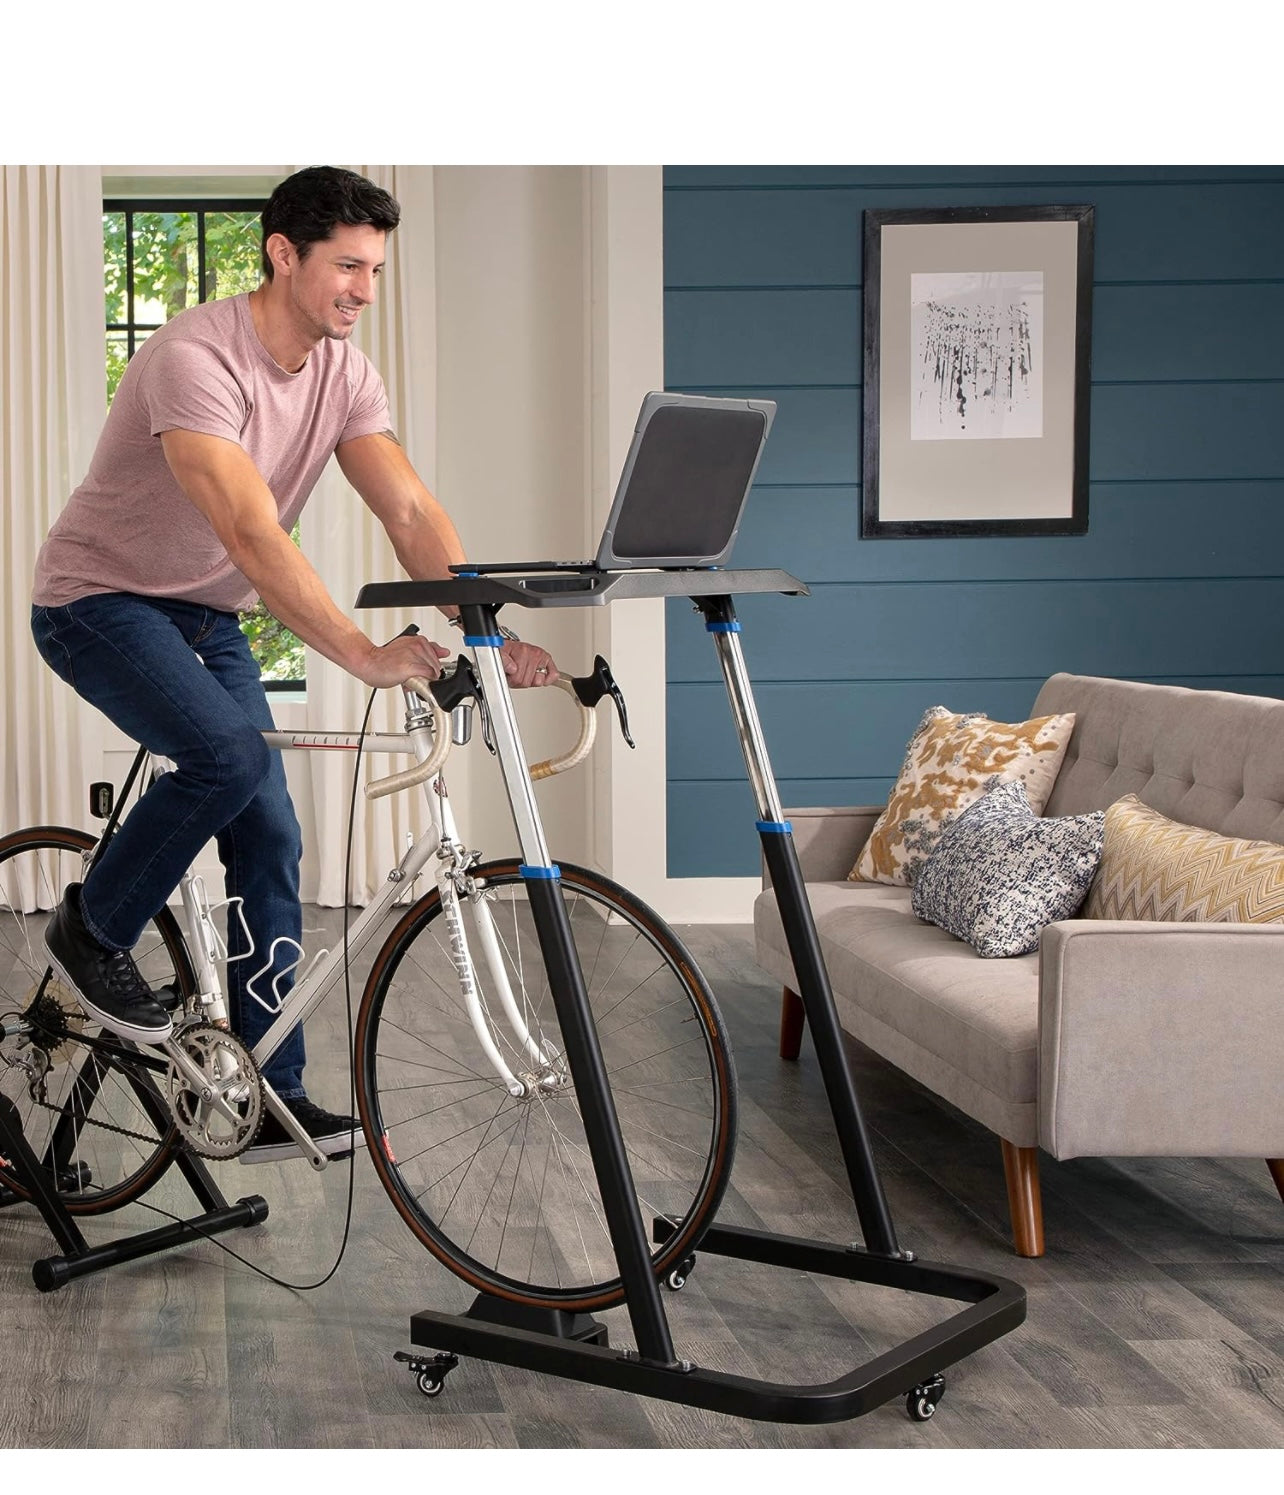 RAD Cycle Products Adjustable Bike Trainer Fitness Desk Portable Workstation Standing Desk